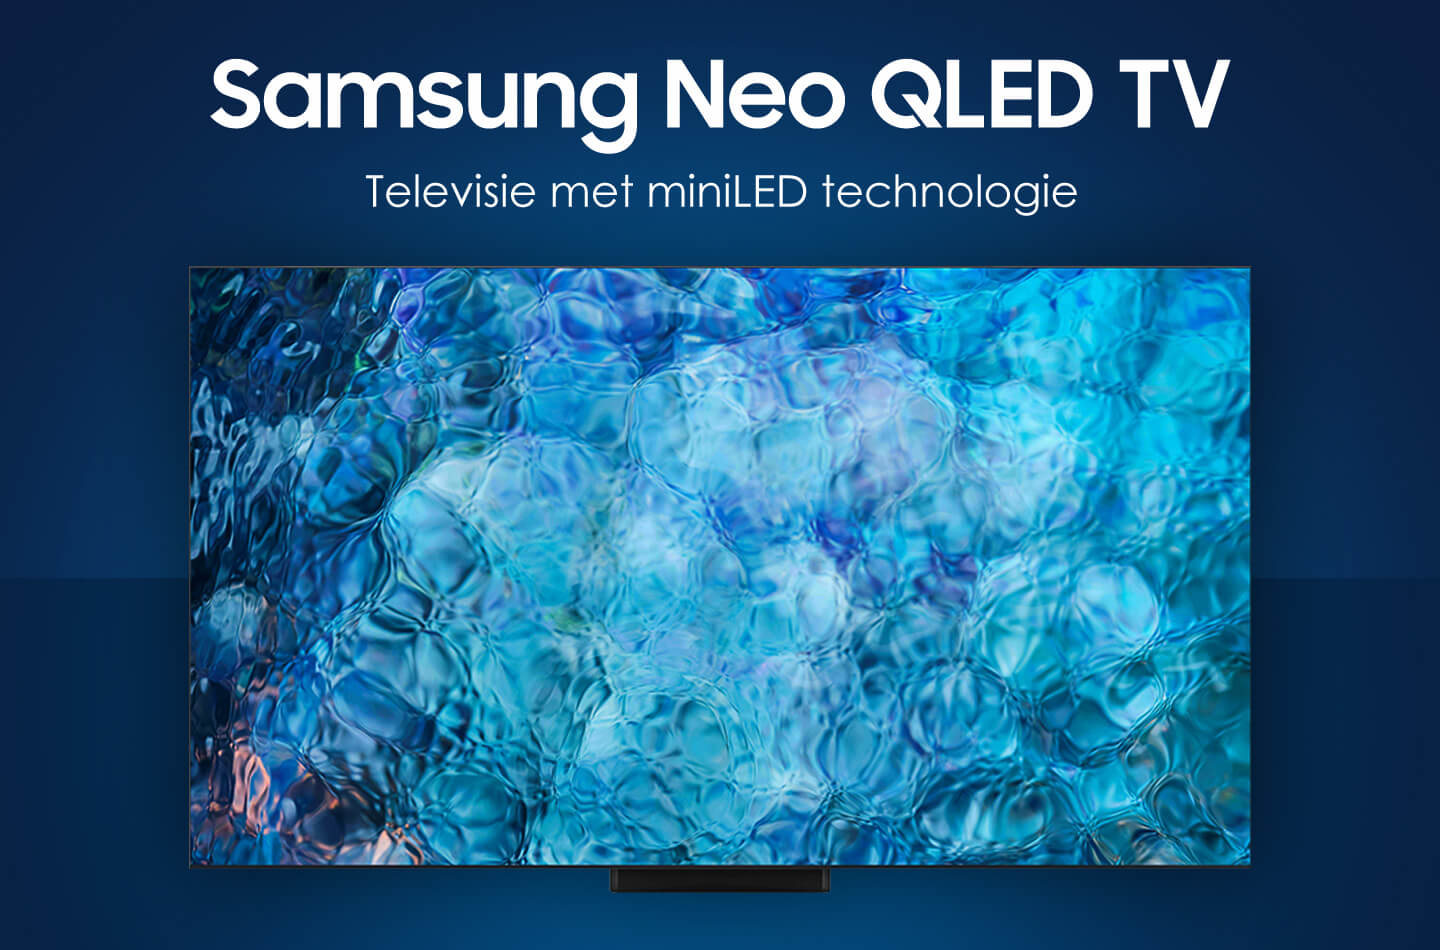 Neo Qled Samsung 2023 Обзор